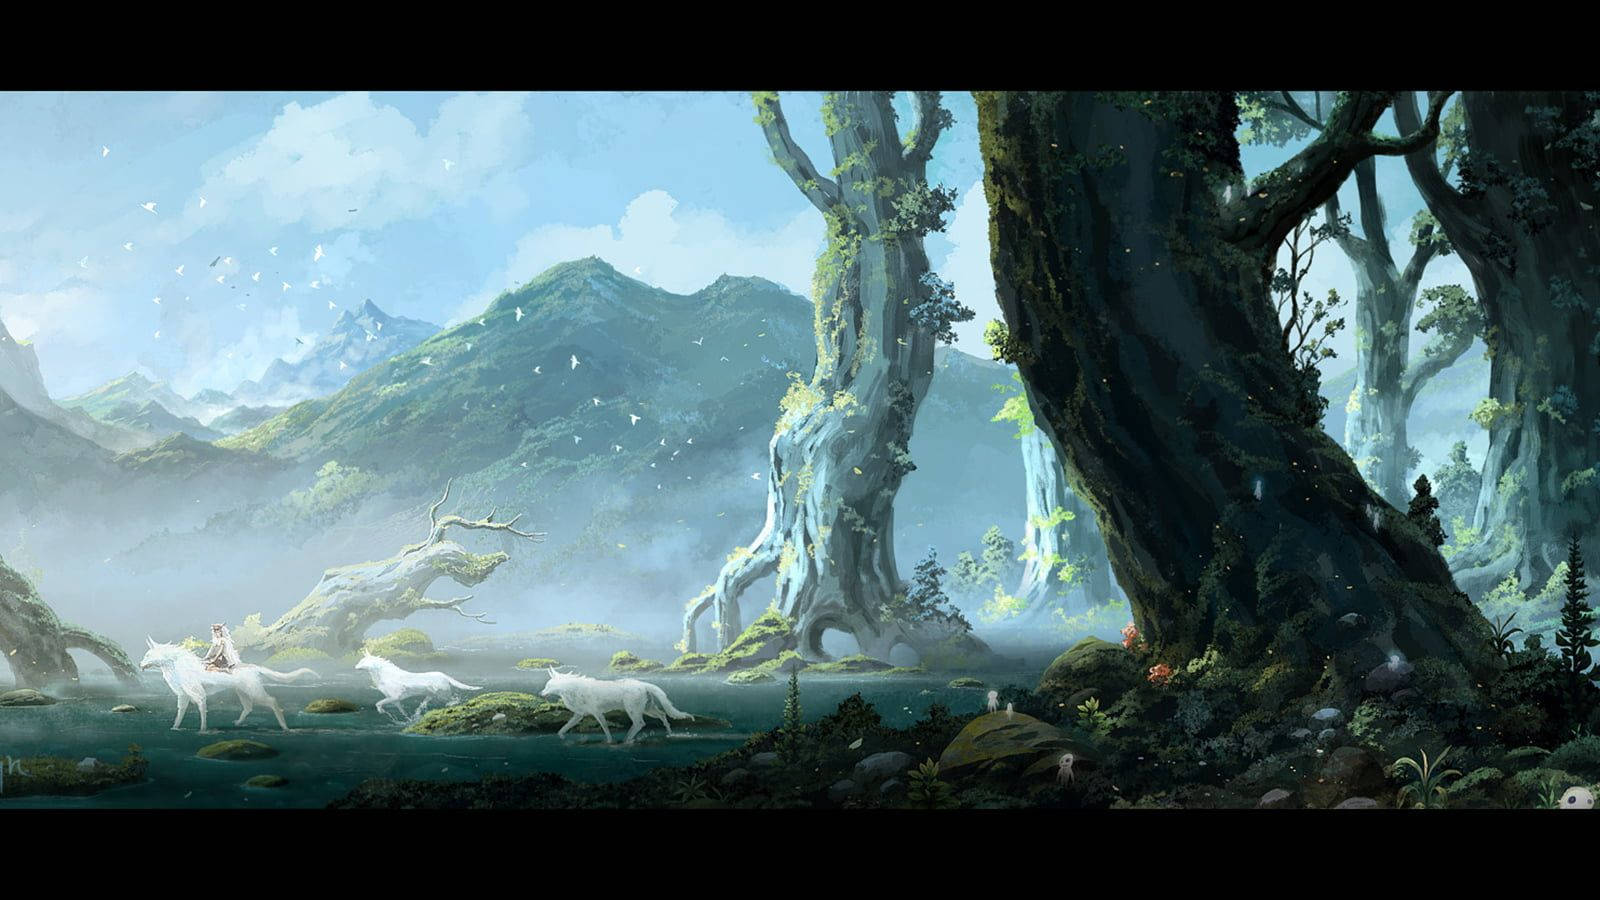 Princess Mononoke 1600X900 Wallpaper and Background Image